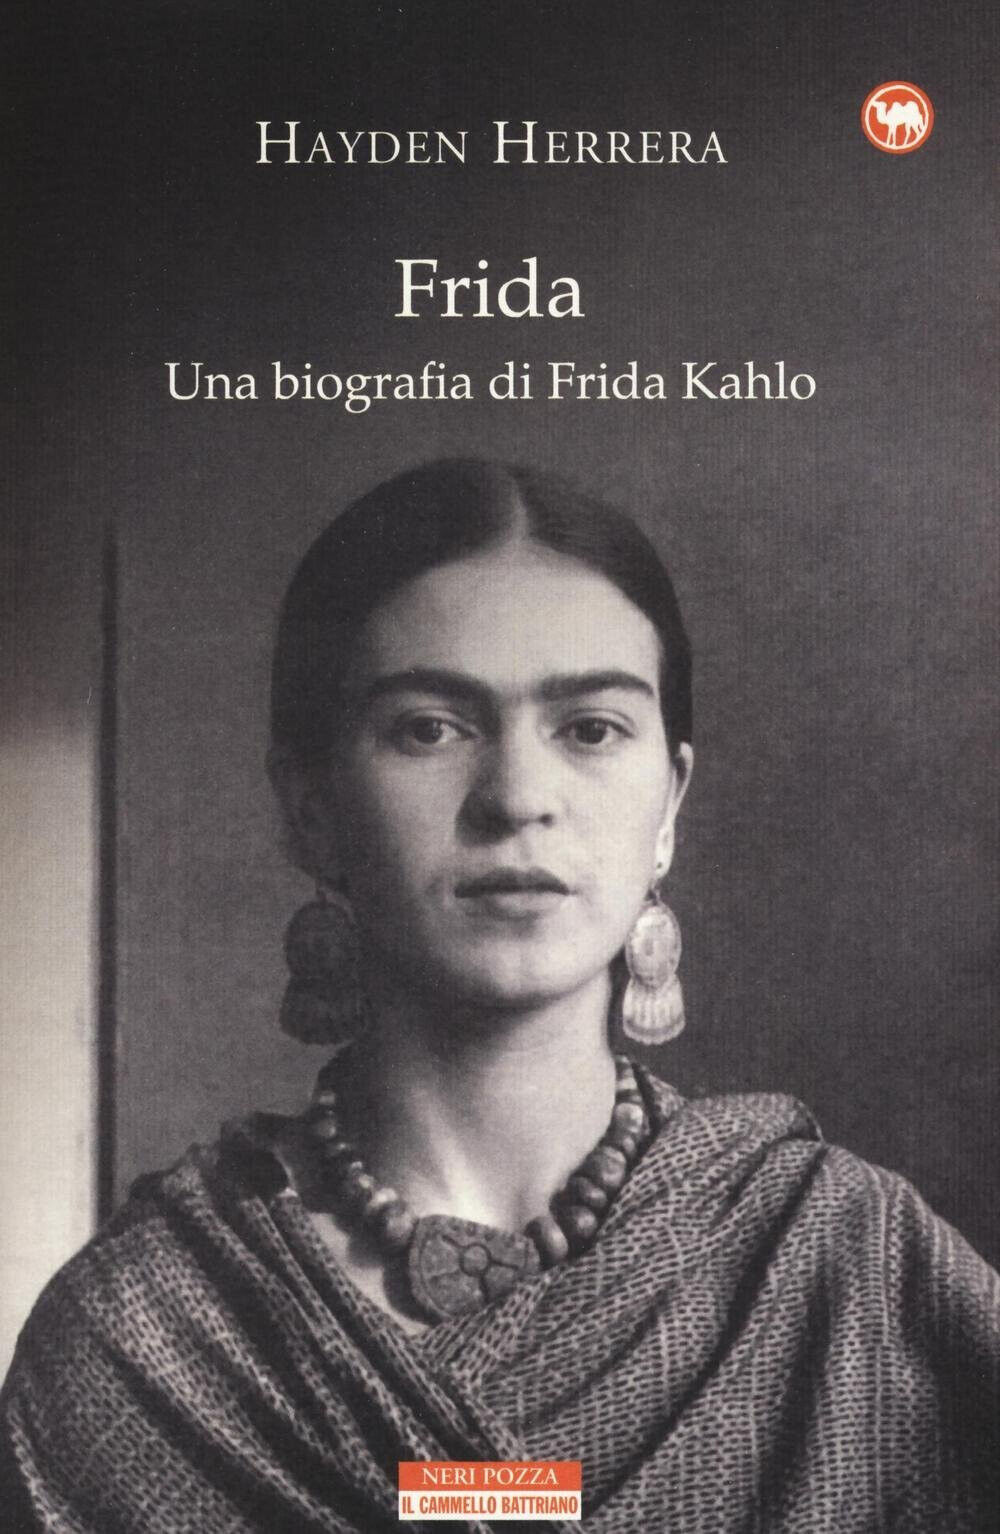 Frida. Una biografia di Frida Kahlo - Hayden Herrera - Neri Pozza, 2016 libro usato